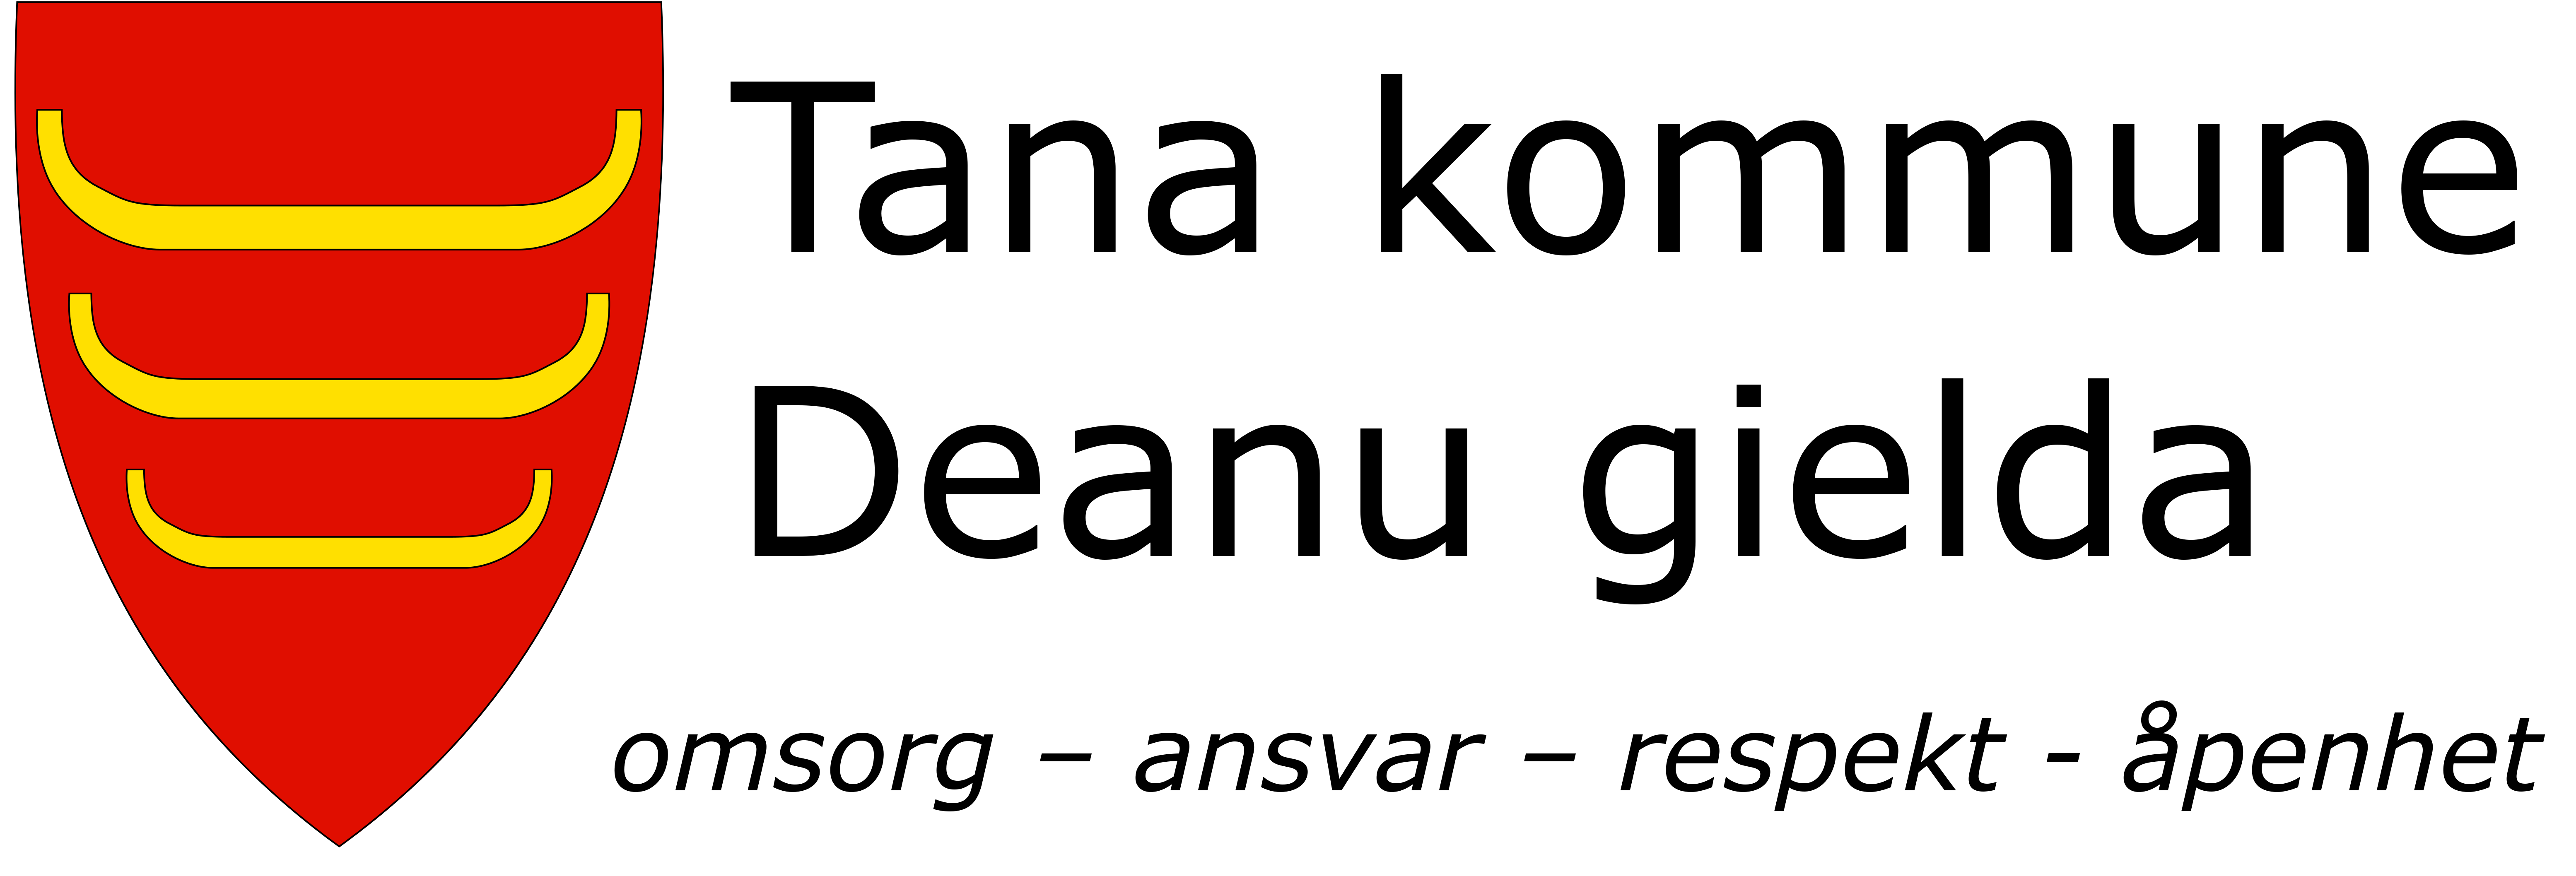 Tana kommune - Deanu gielda logo